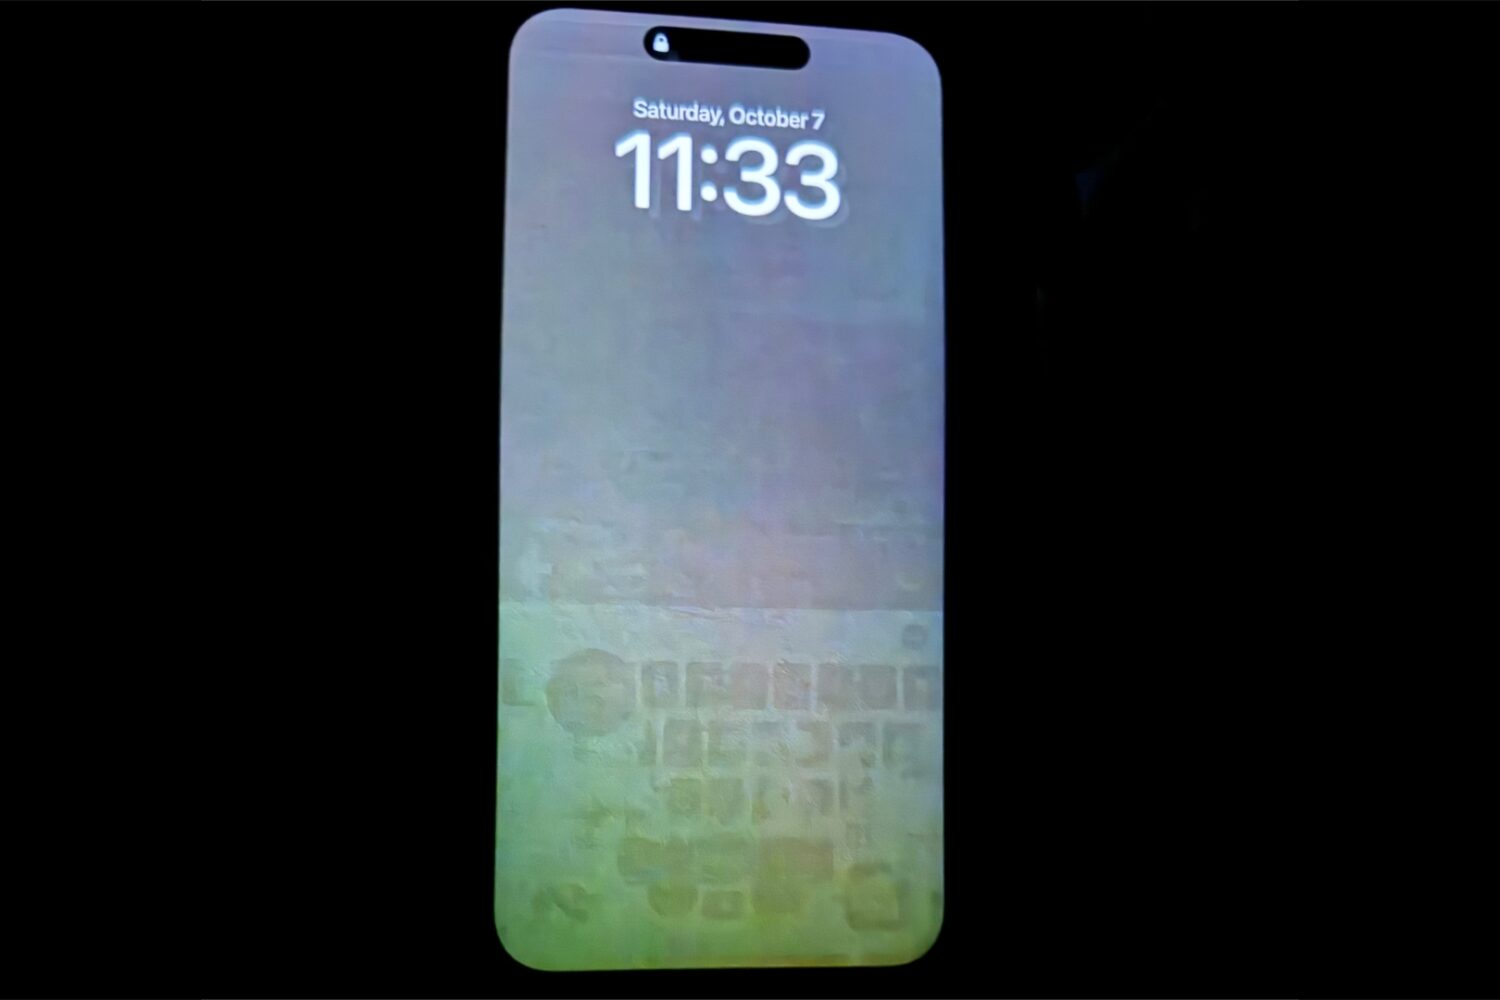 Burn-in on the iPhone's OLED screen